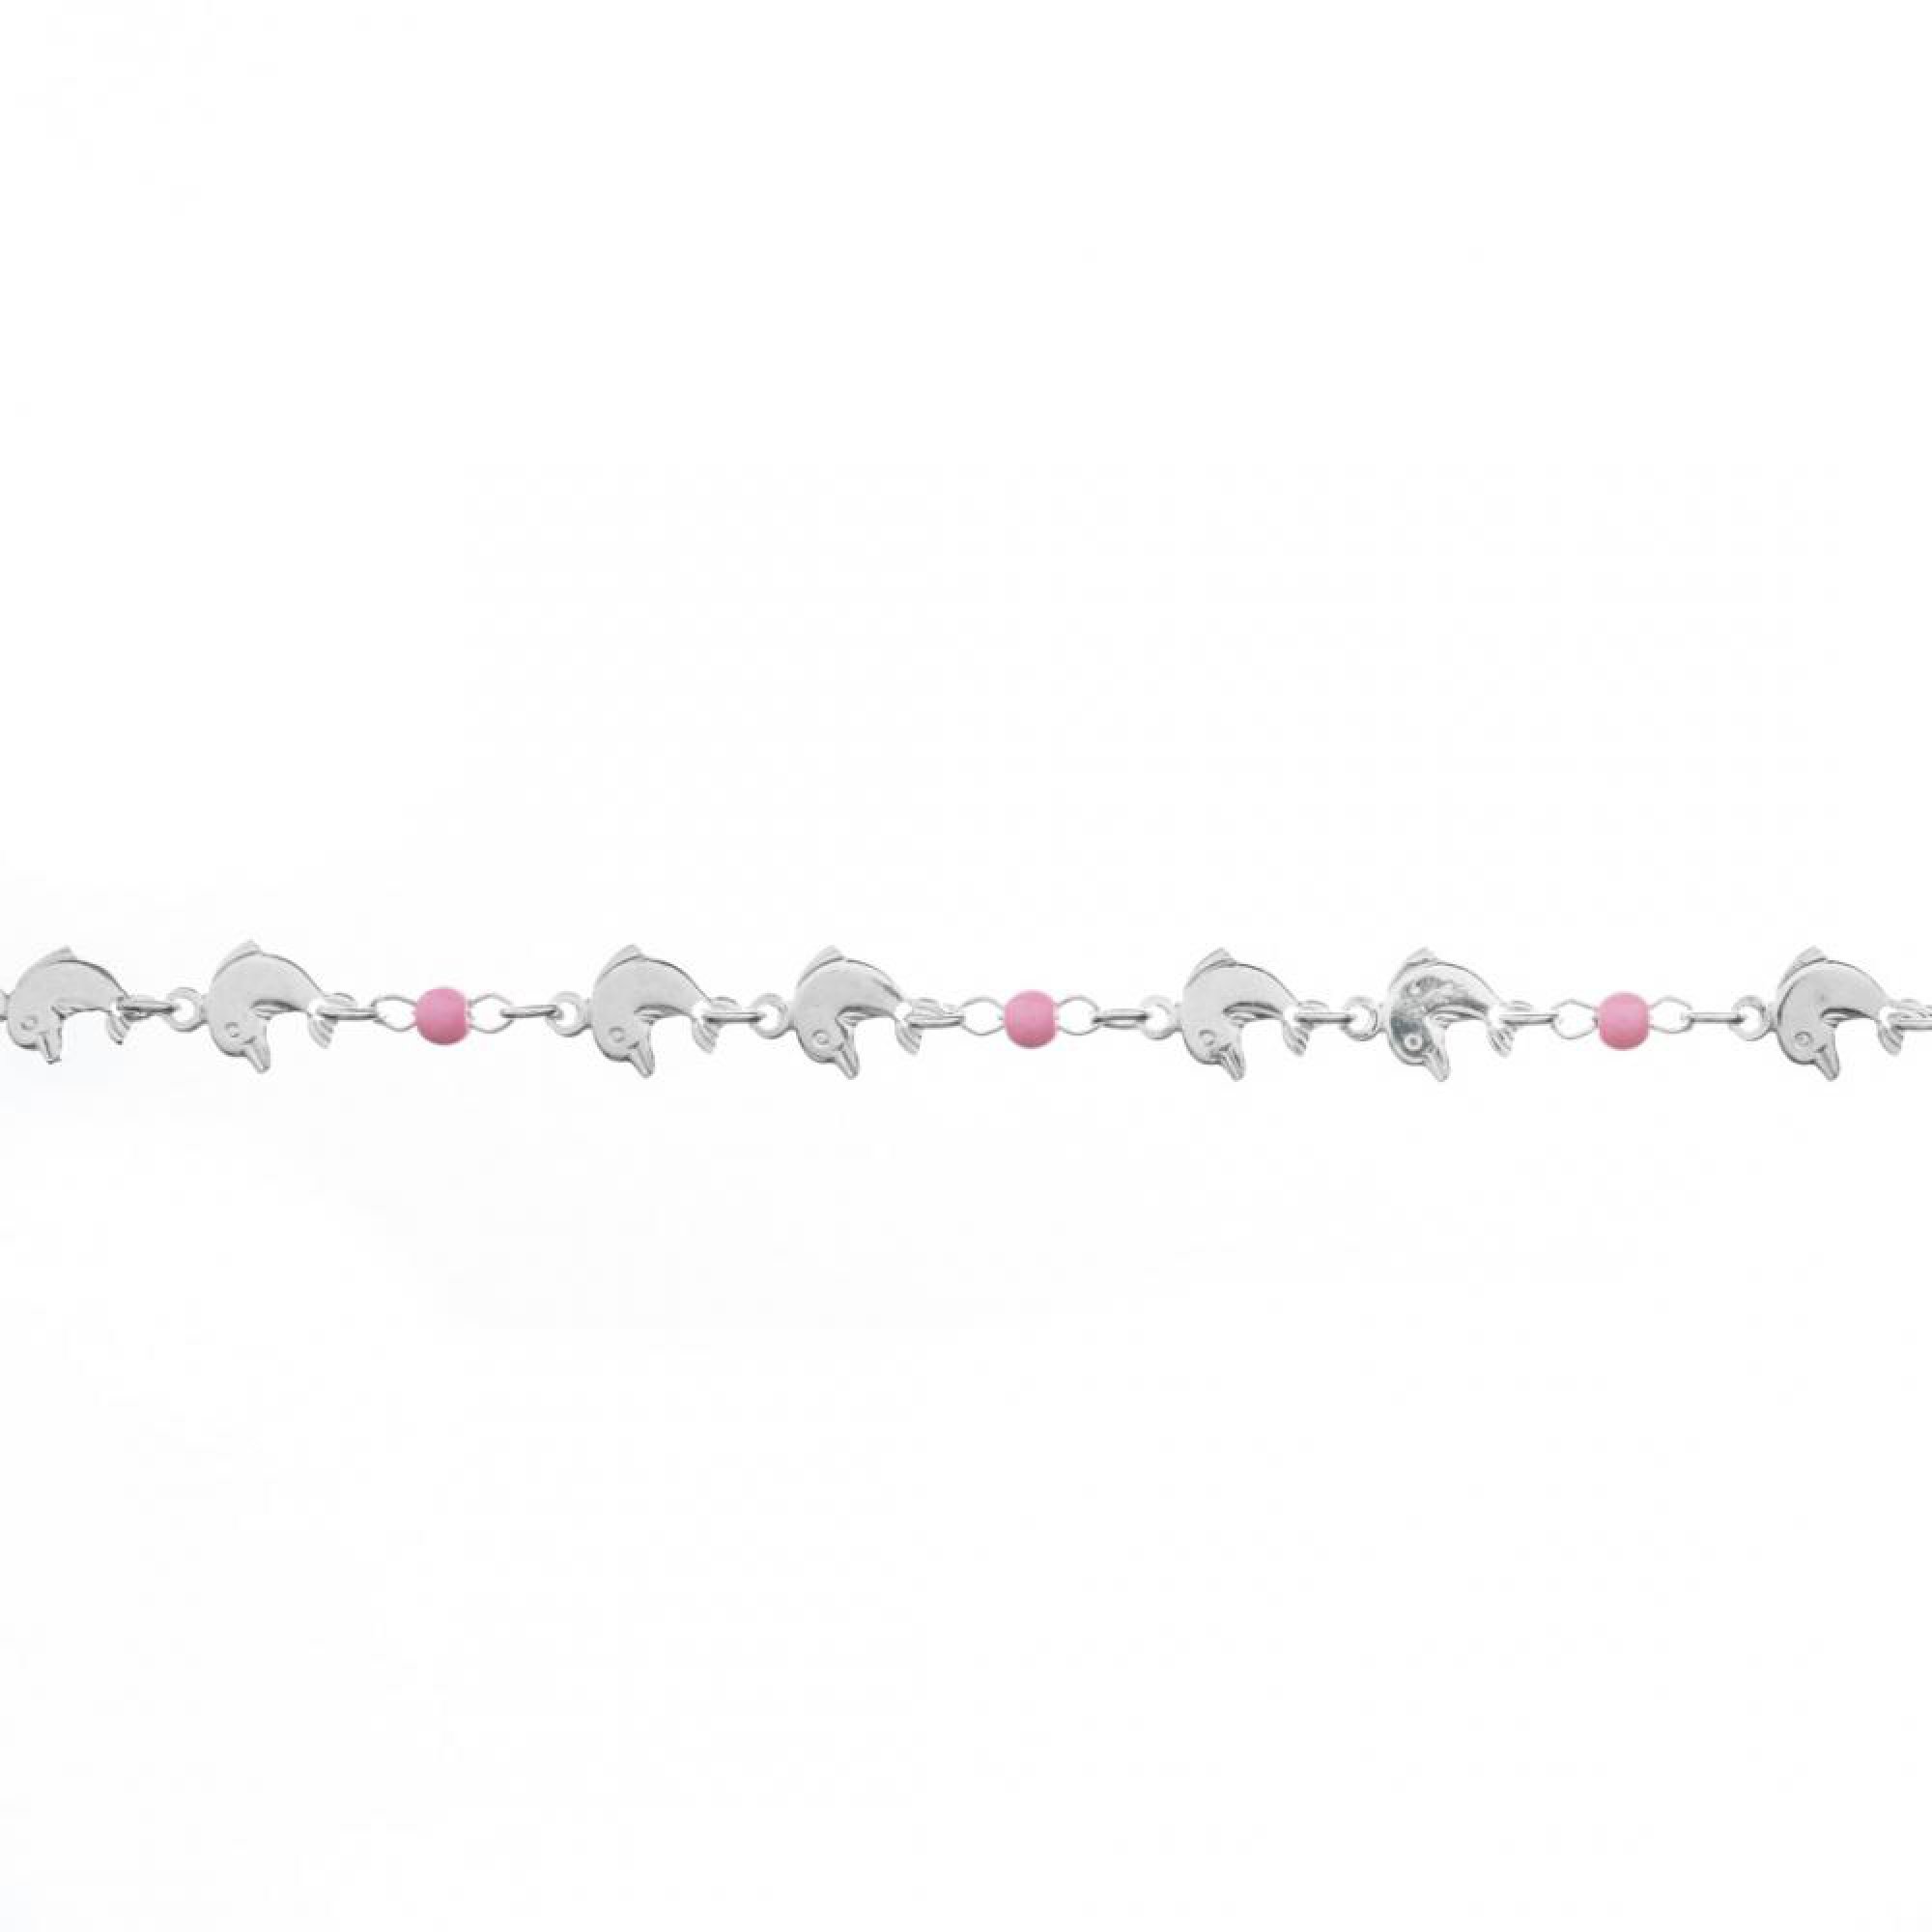 Dolphin bracelet with enamel pink beads